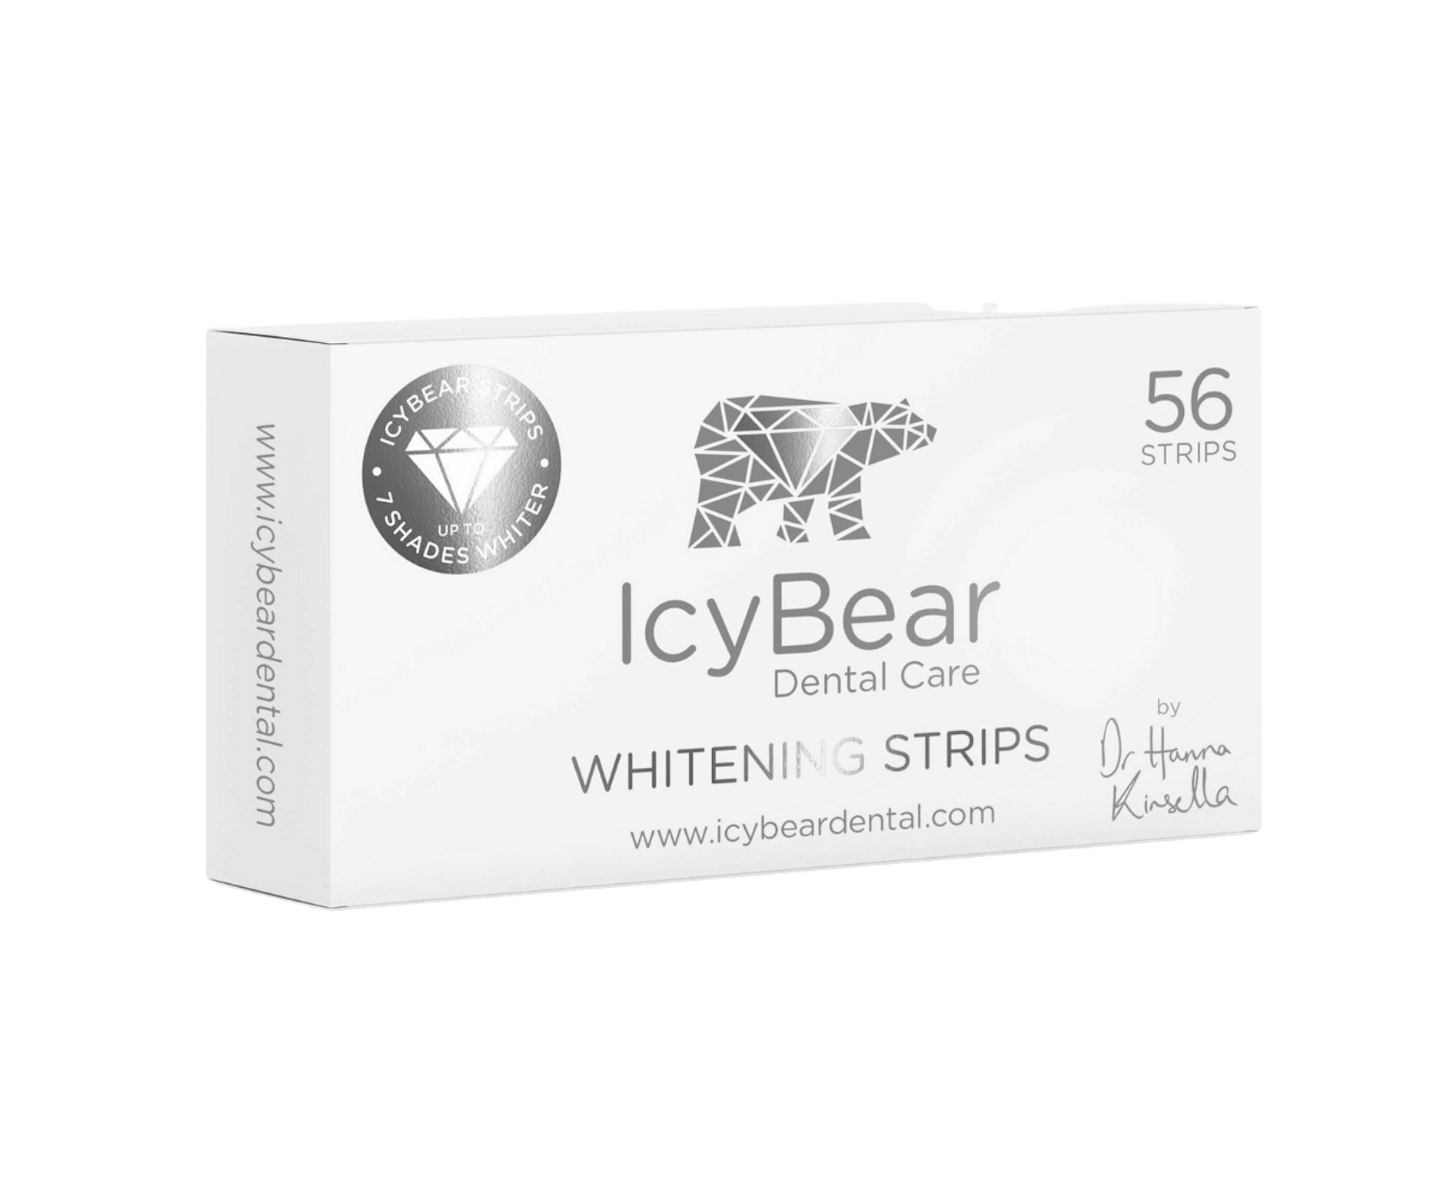 Icy Bear Whitening Strips